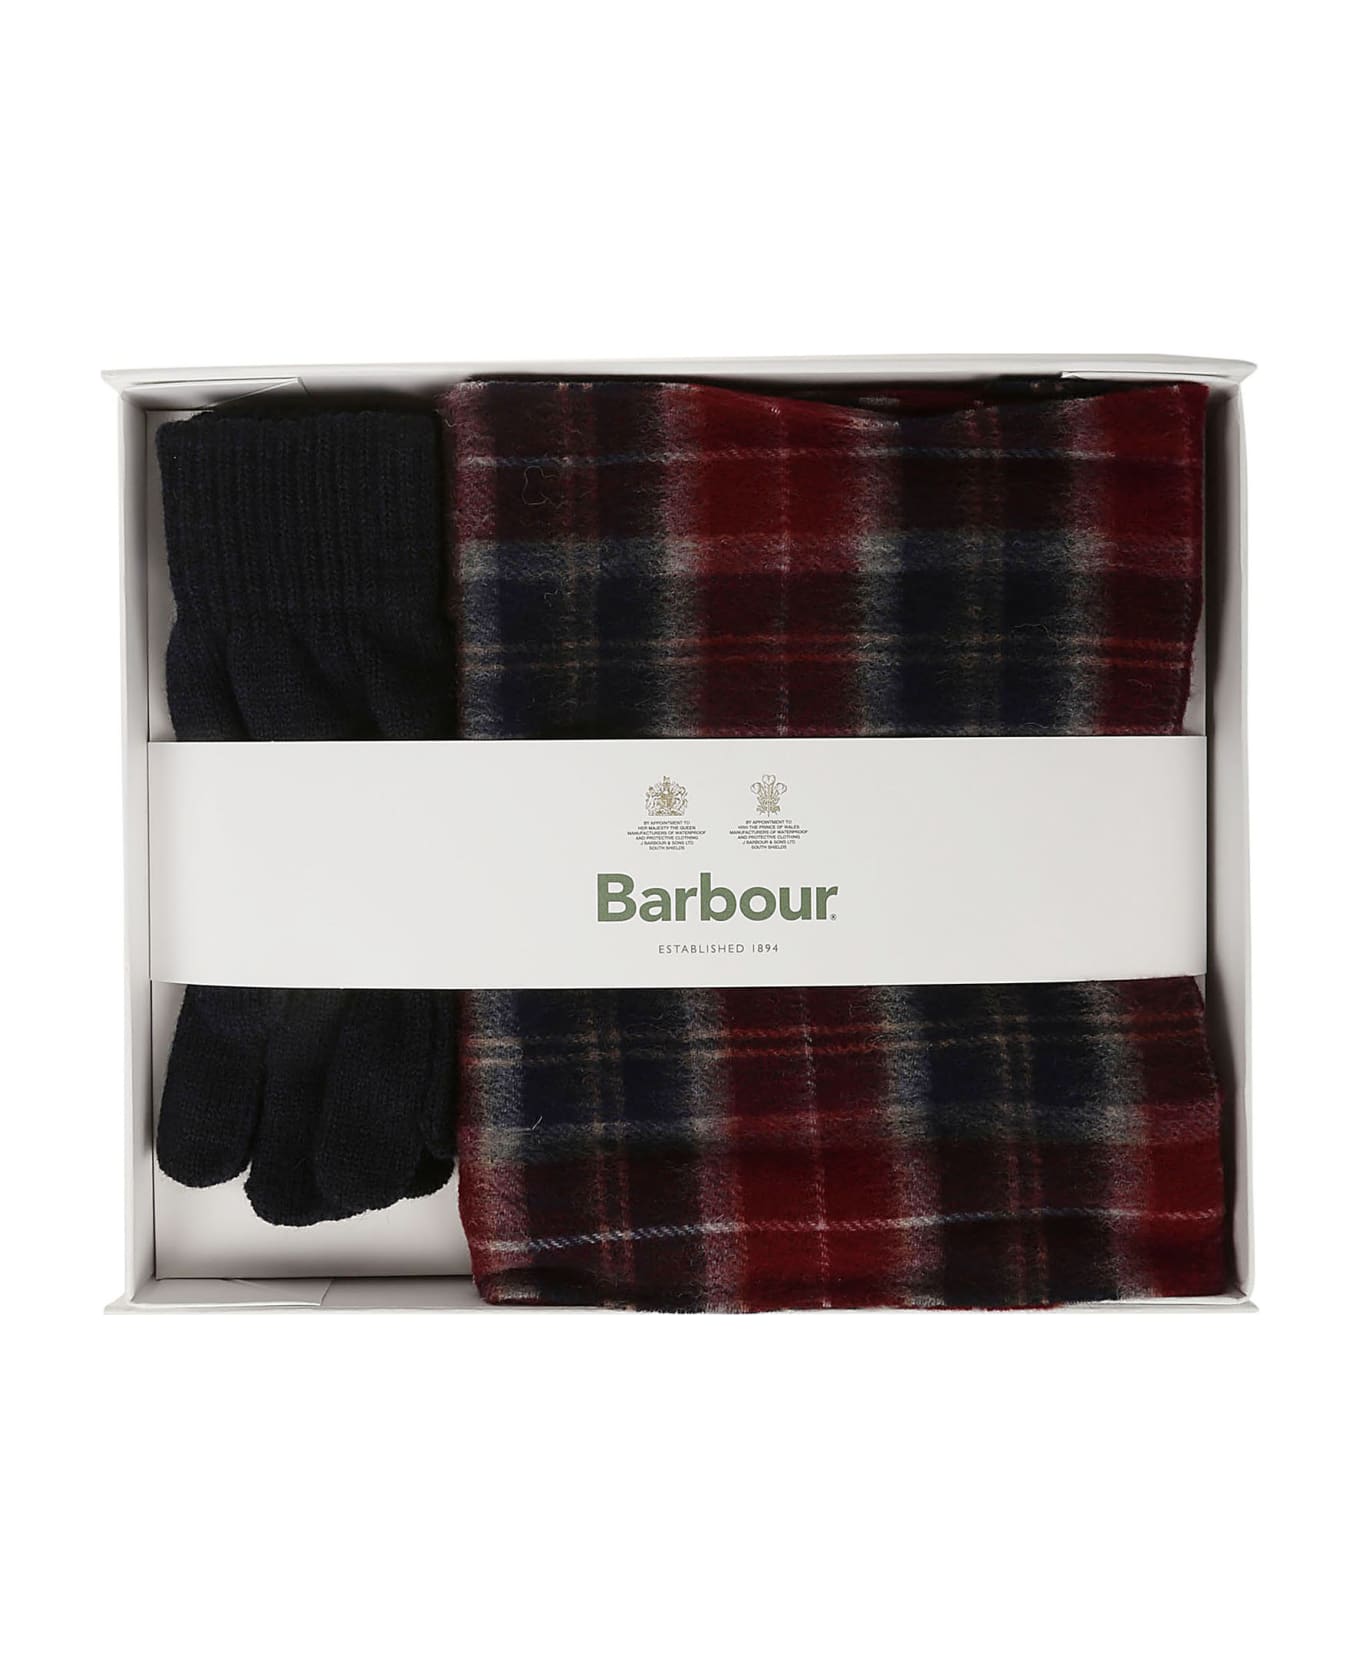 Barbour Tartan Scarf Glove Gift Set - Cranberry